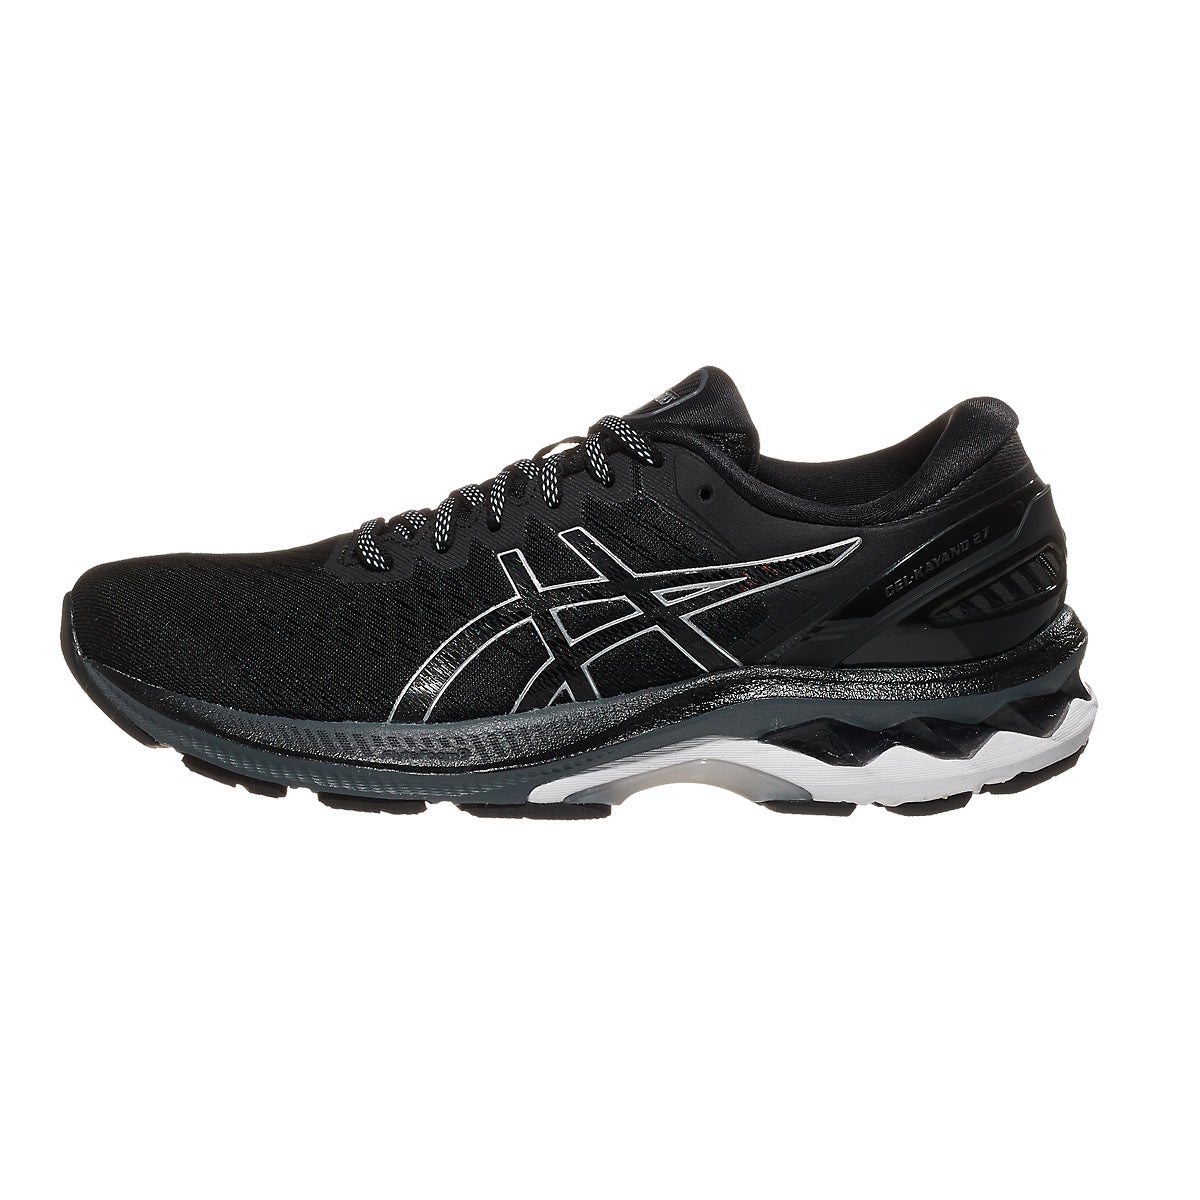 ASICS Gel Kayano 27 Women's Shoes Black/Pure Silver 360° View | Running ...